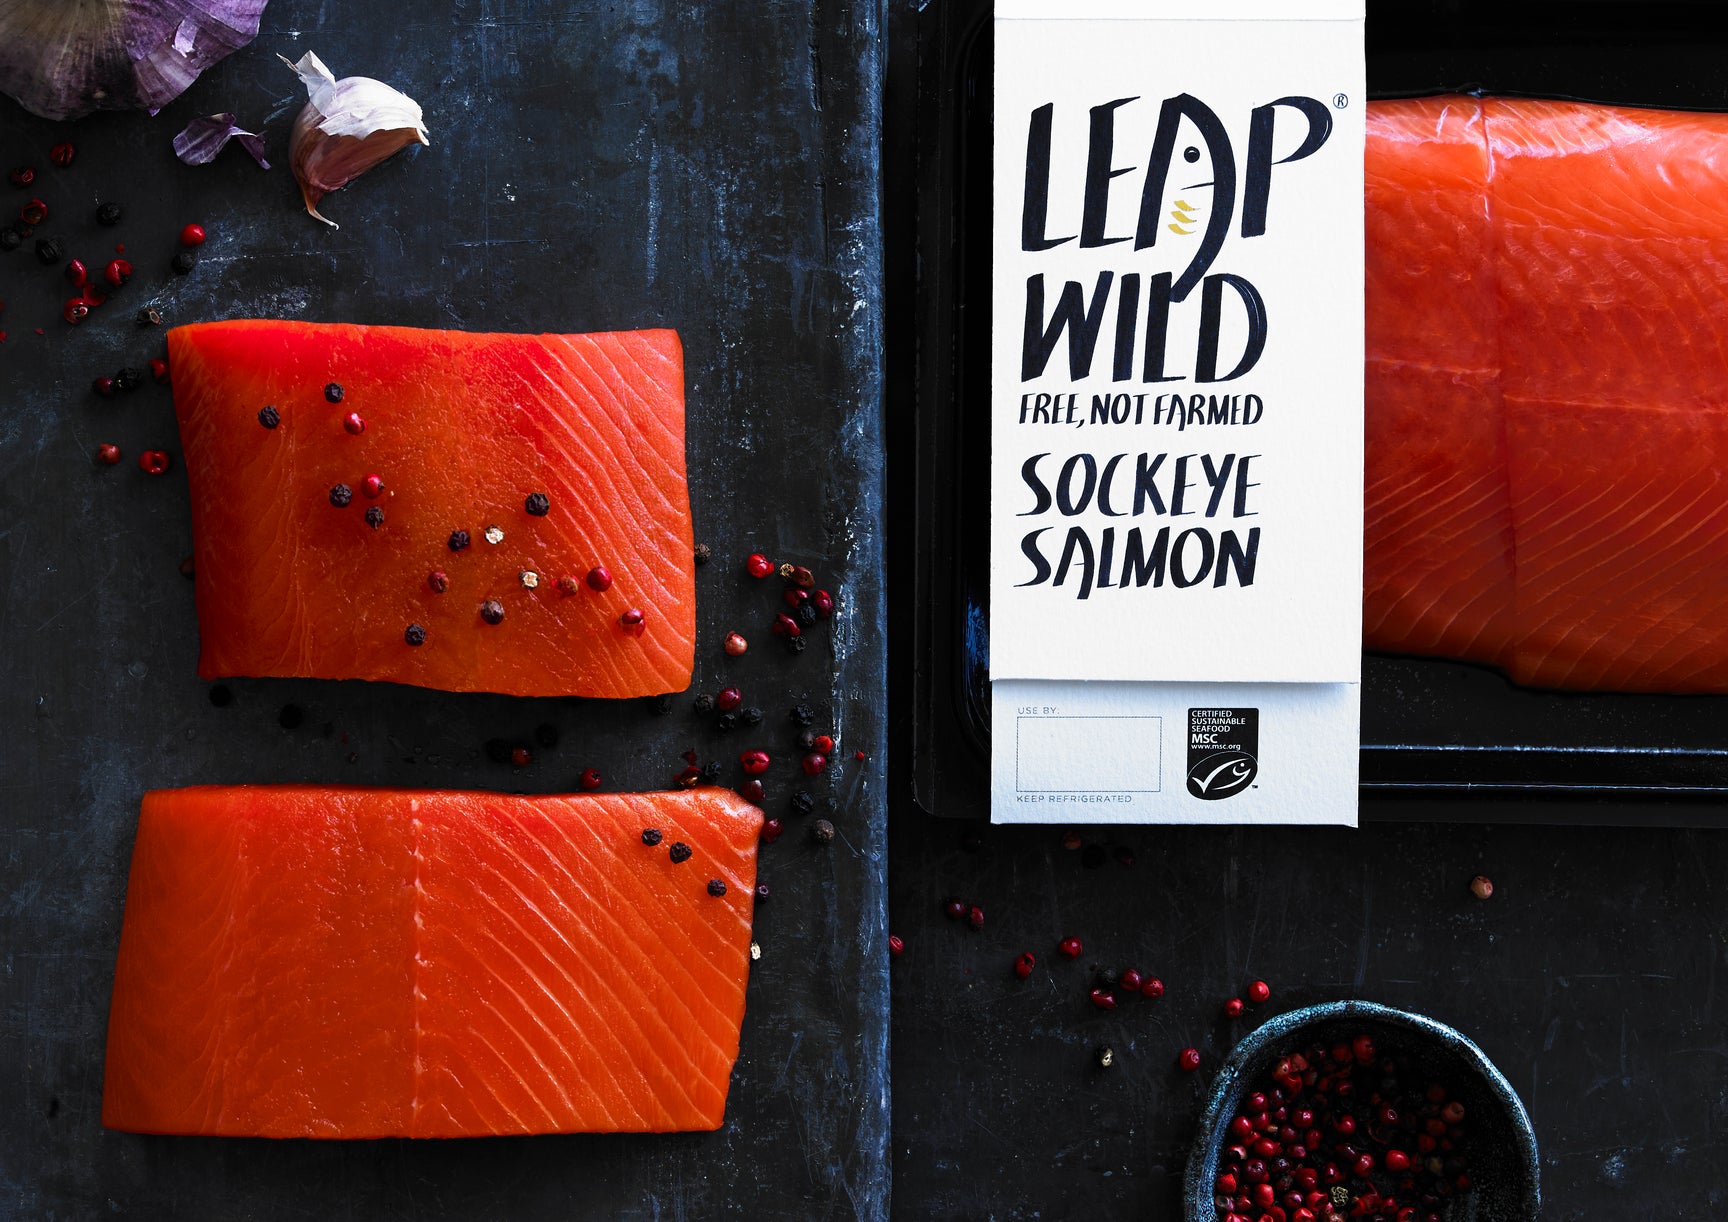 Leap wild sockeye salmon 